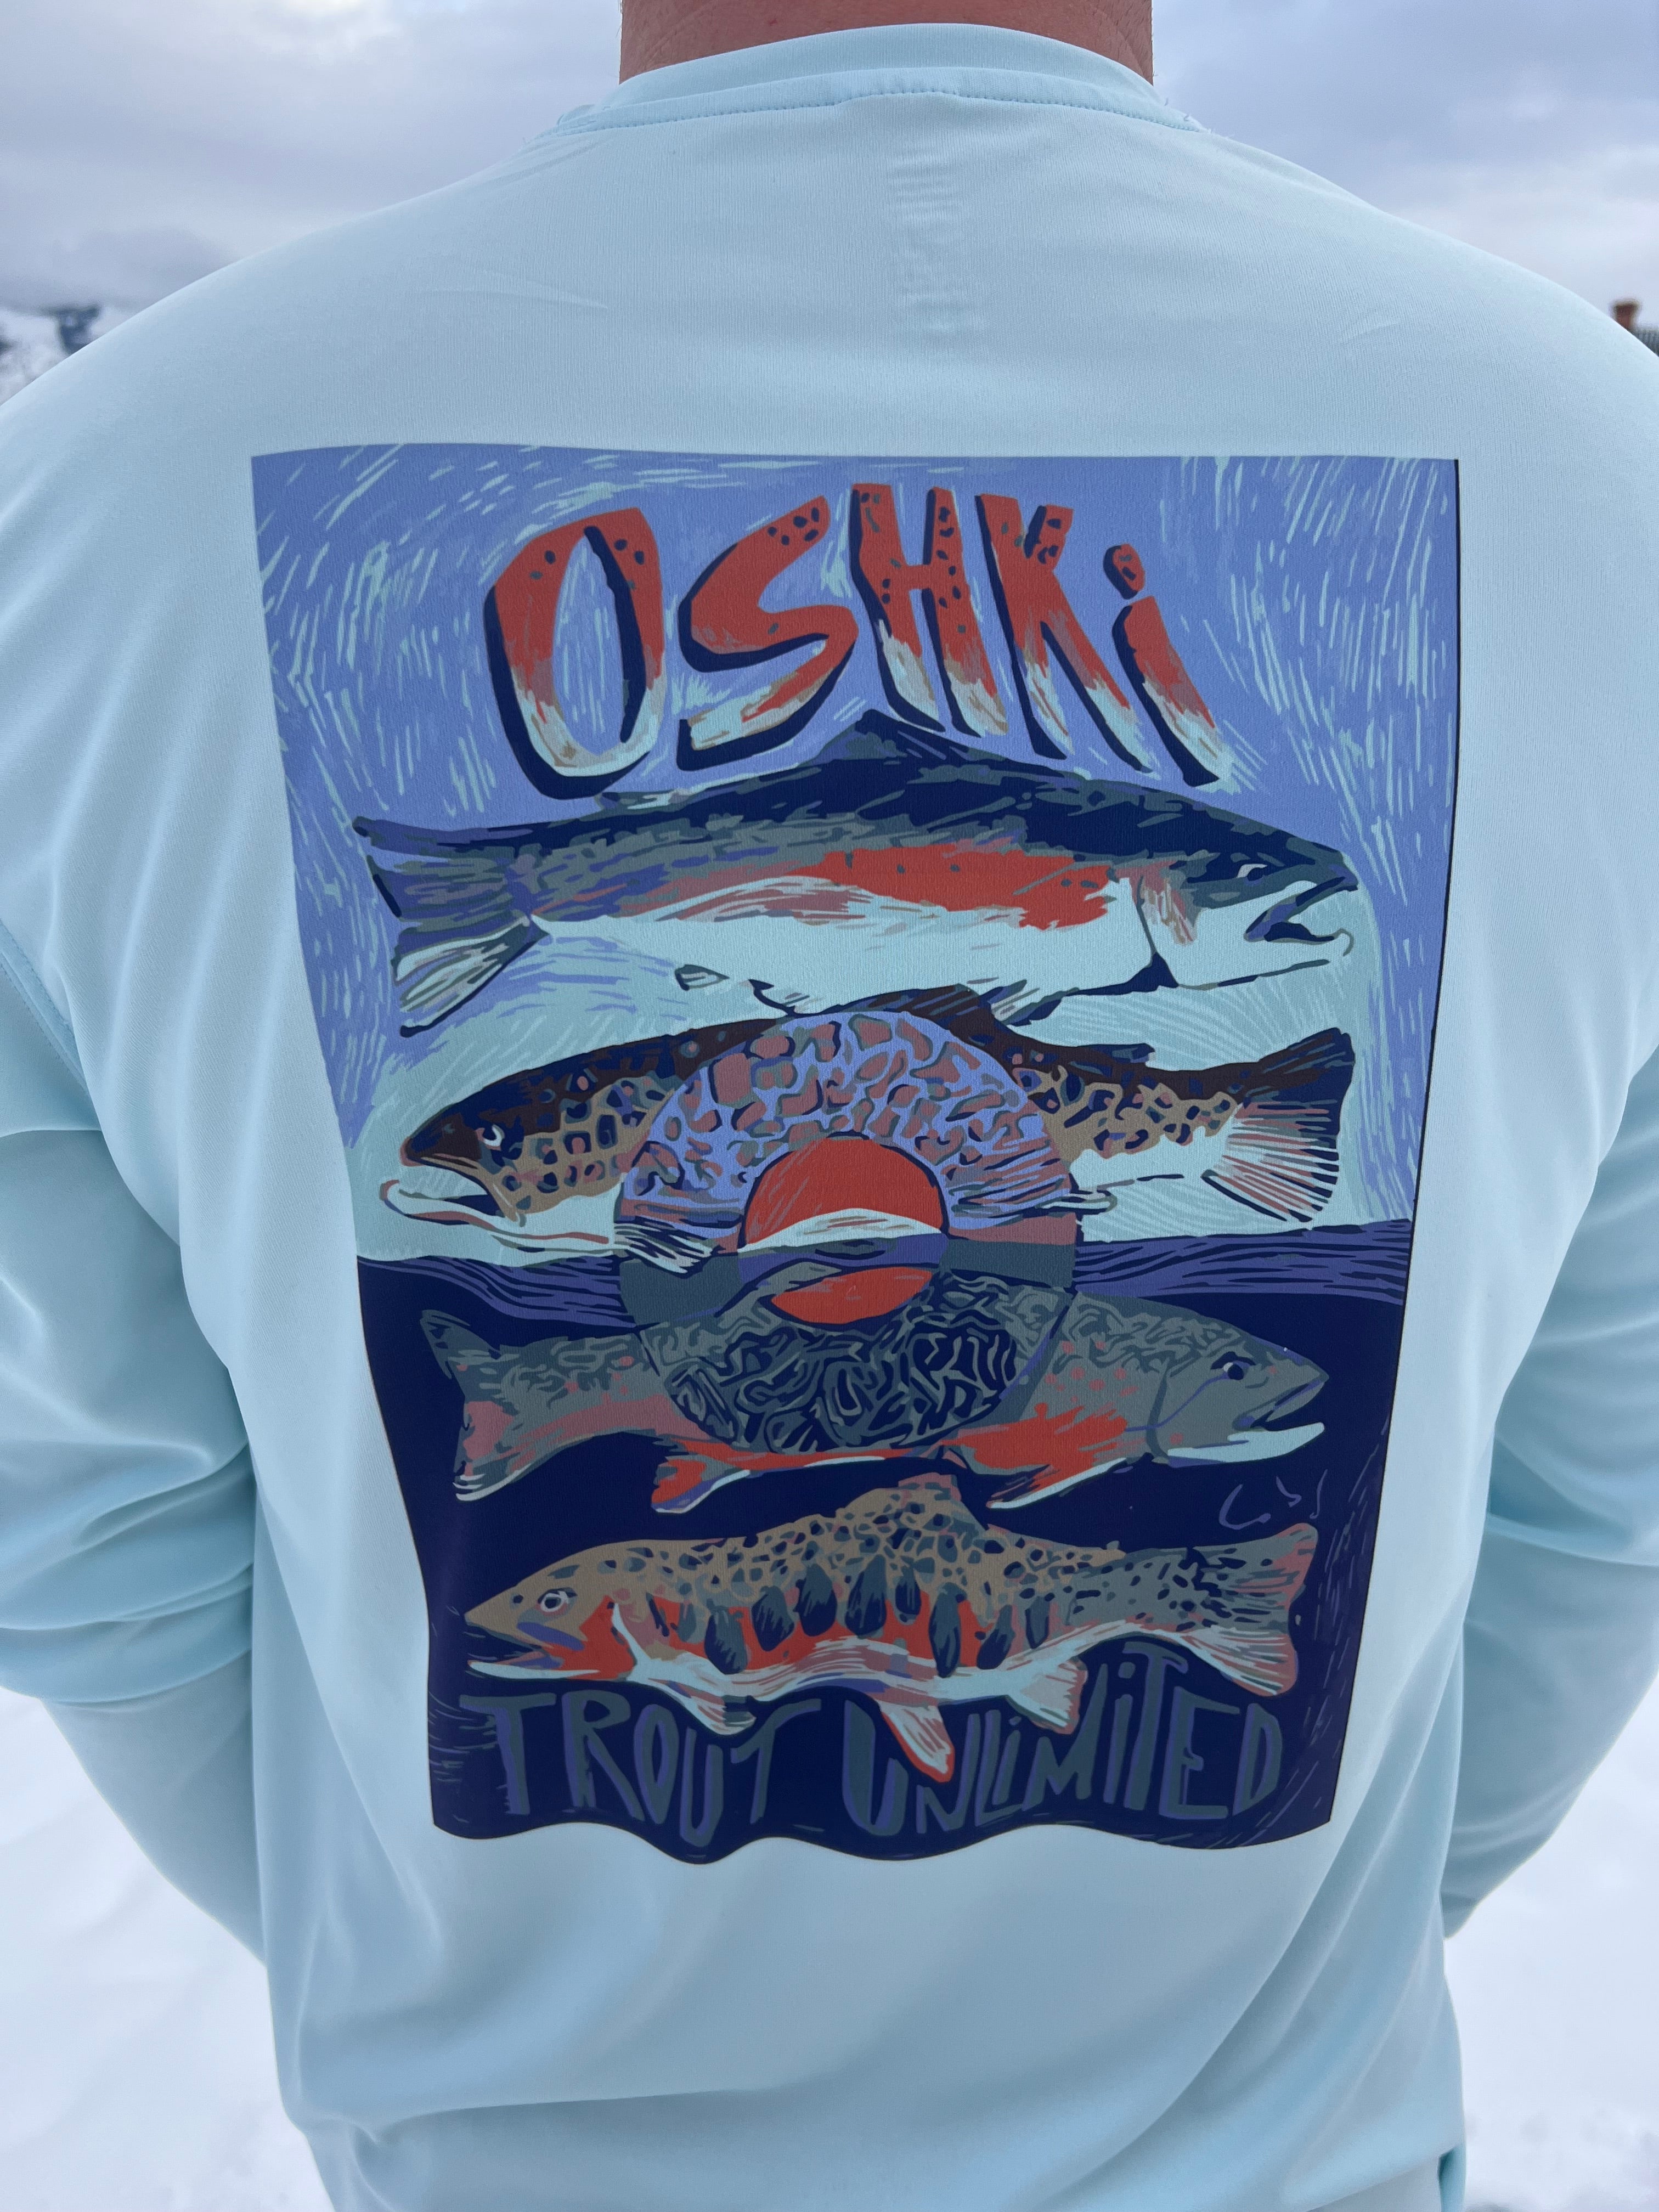 Oshki Collaboration with Trout Unlimited - Oshki